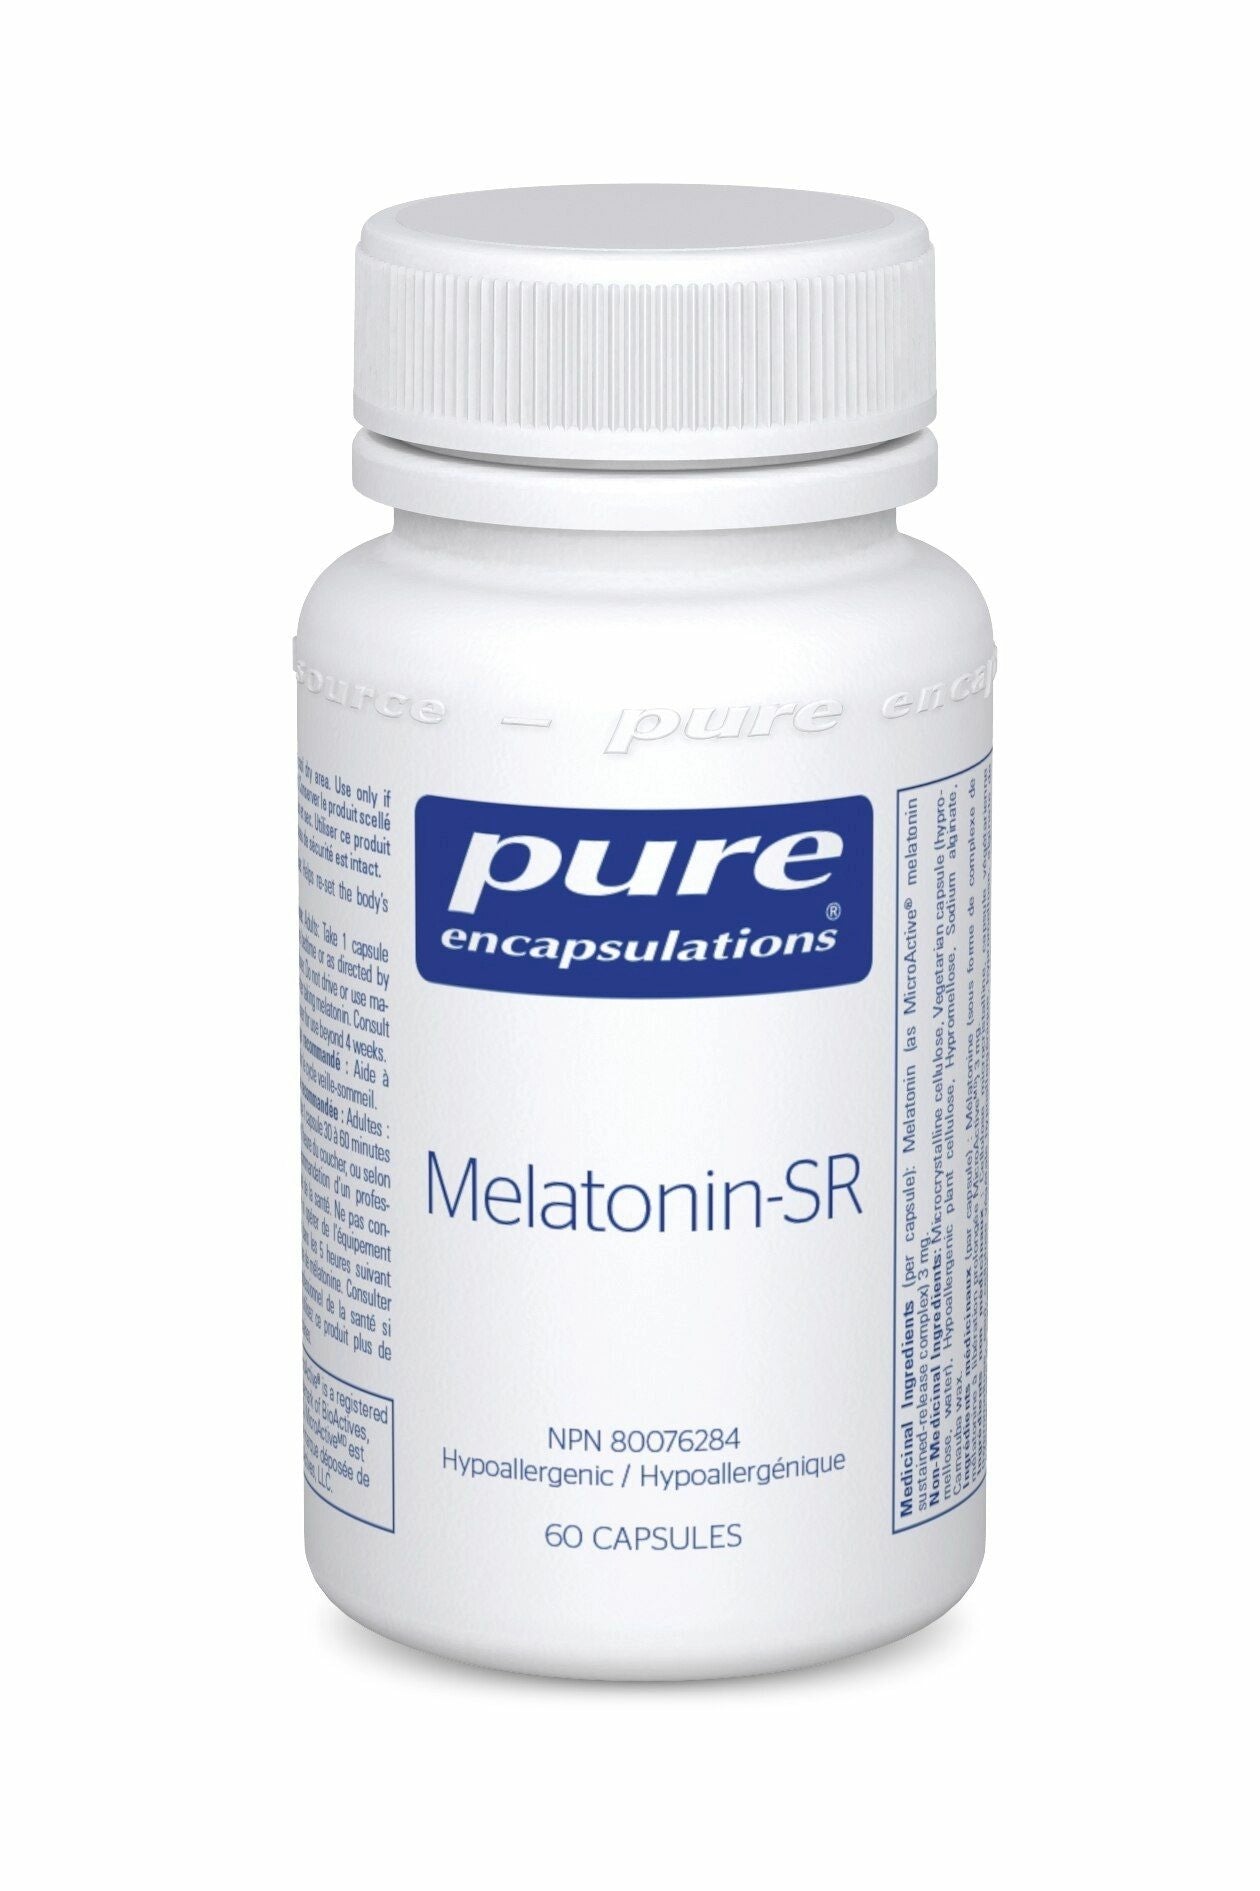 Pure encapsulations Melatonin-SR (60 caps)